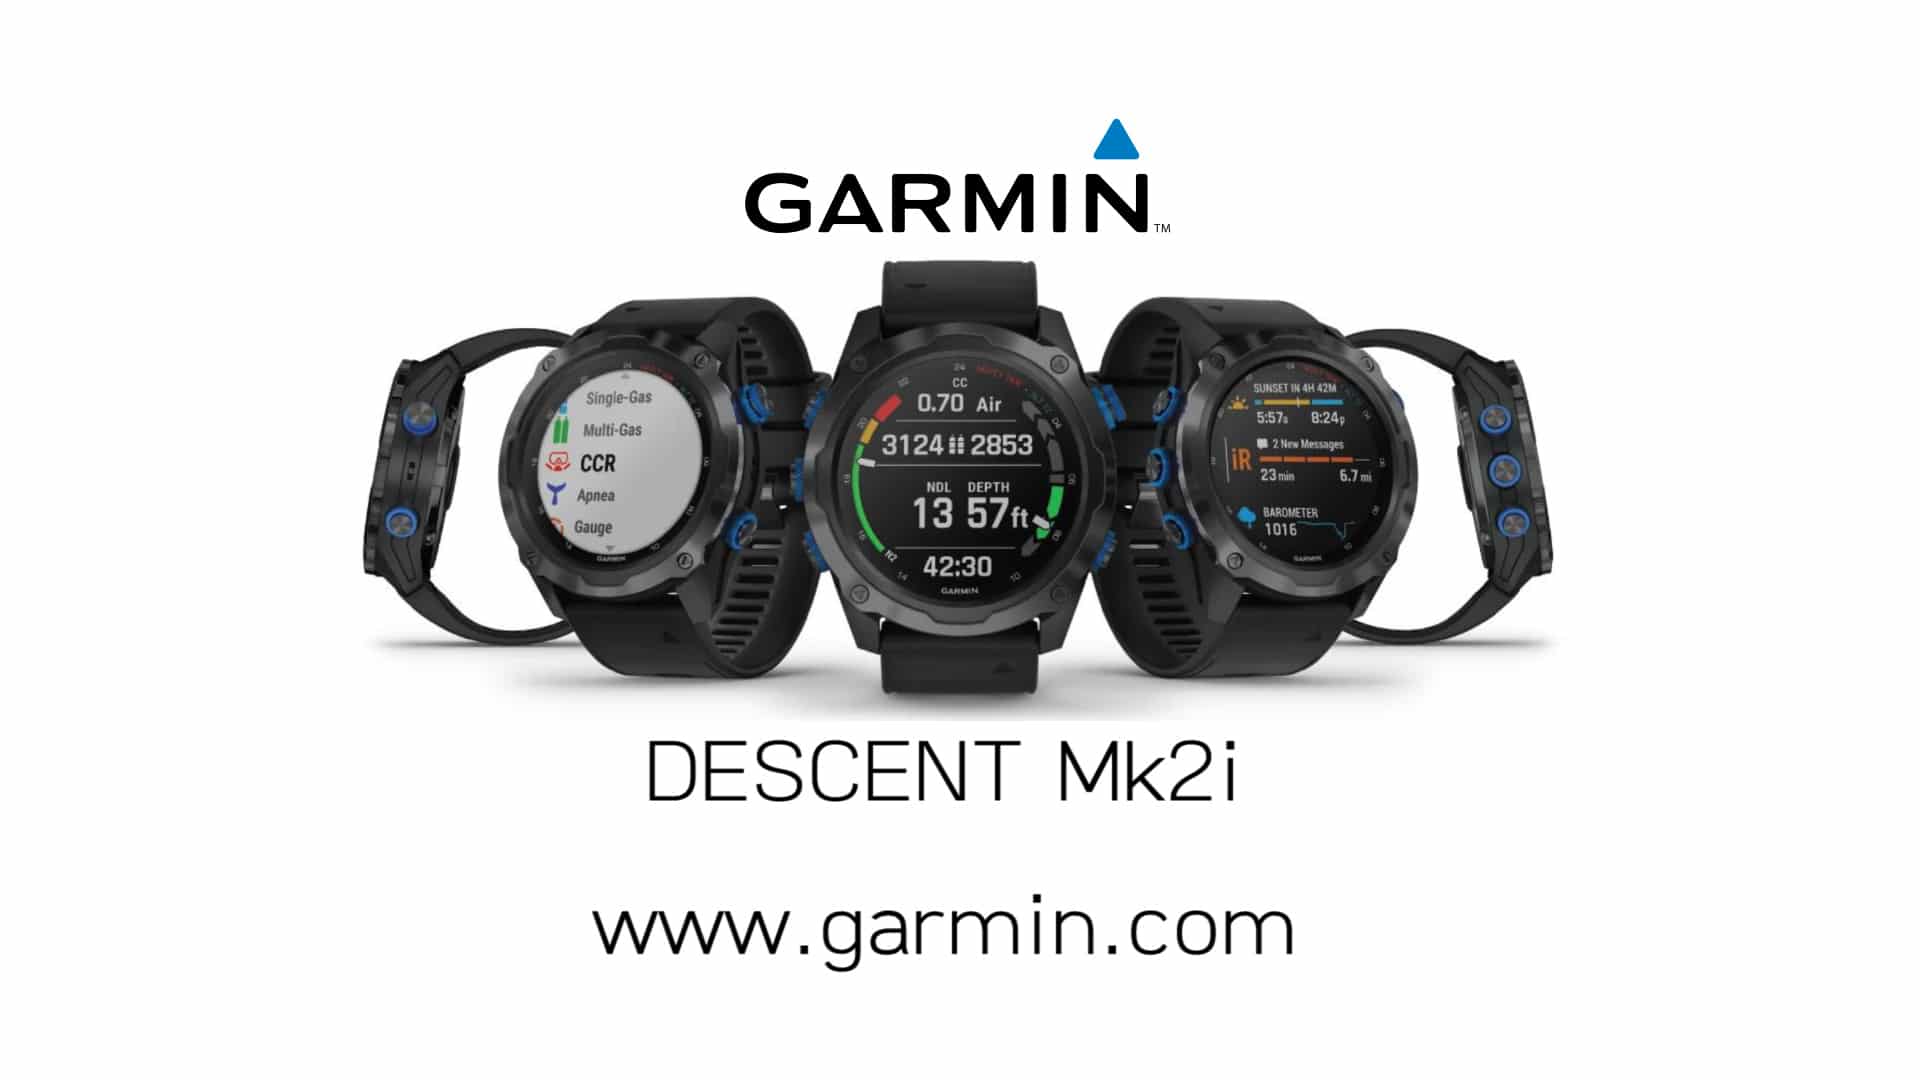 equipment-review-new-garmin-descent-mk2i-dive-computer-watch-video